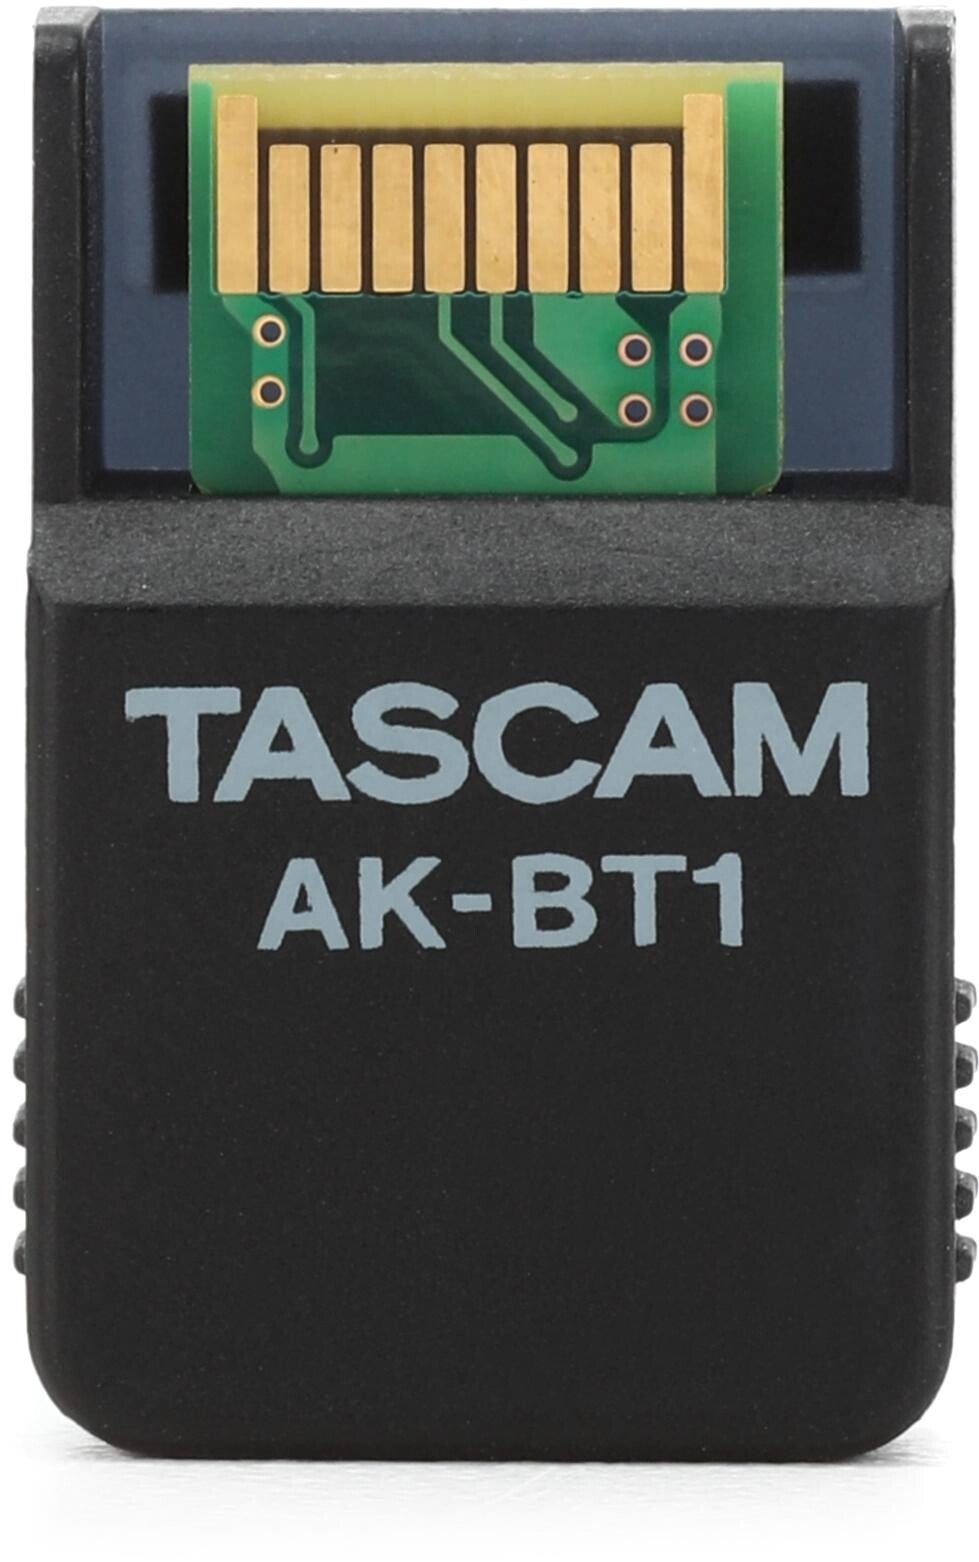 TASCAM AK-BT1 Bluetooth Adapter | Sweetwater